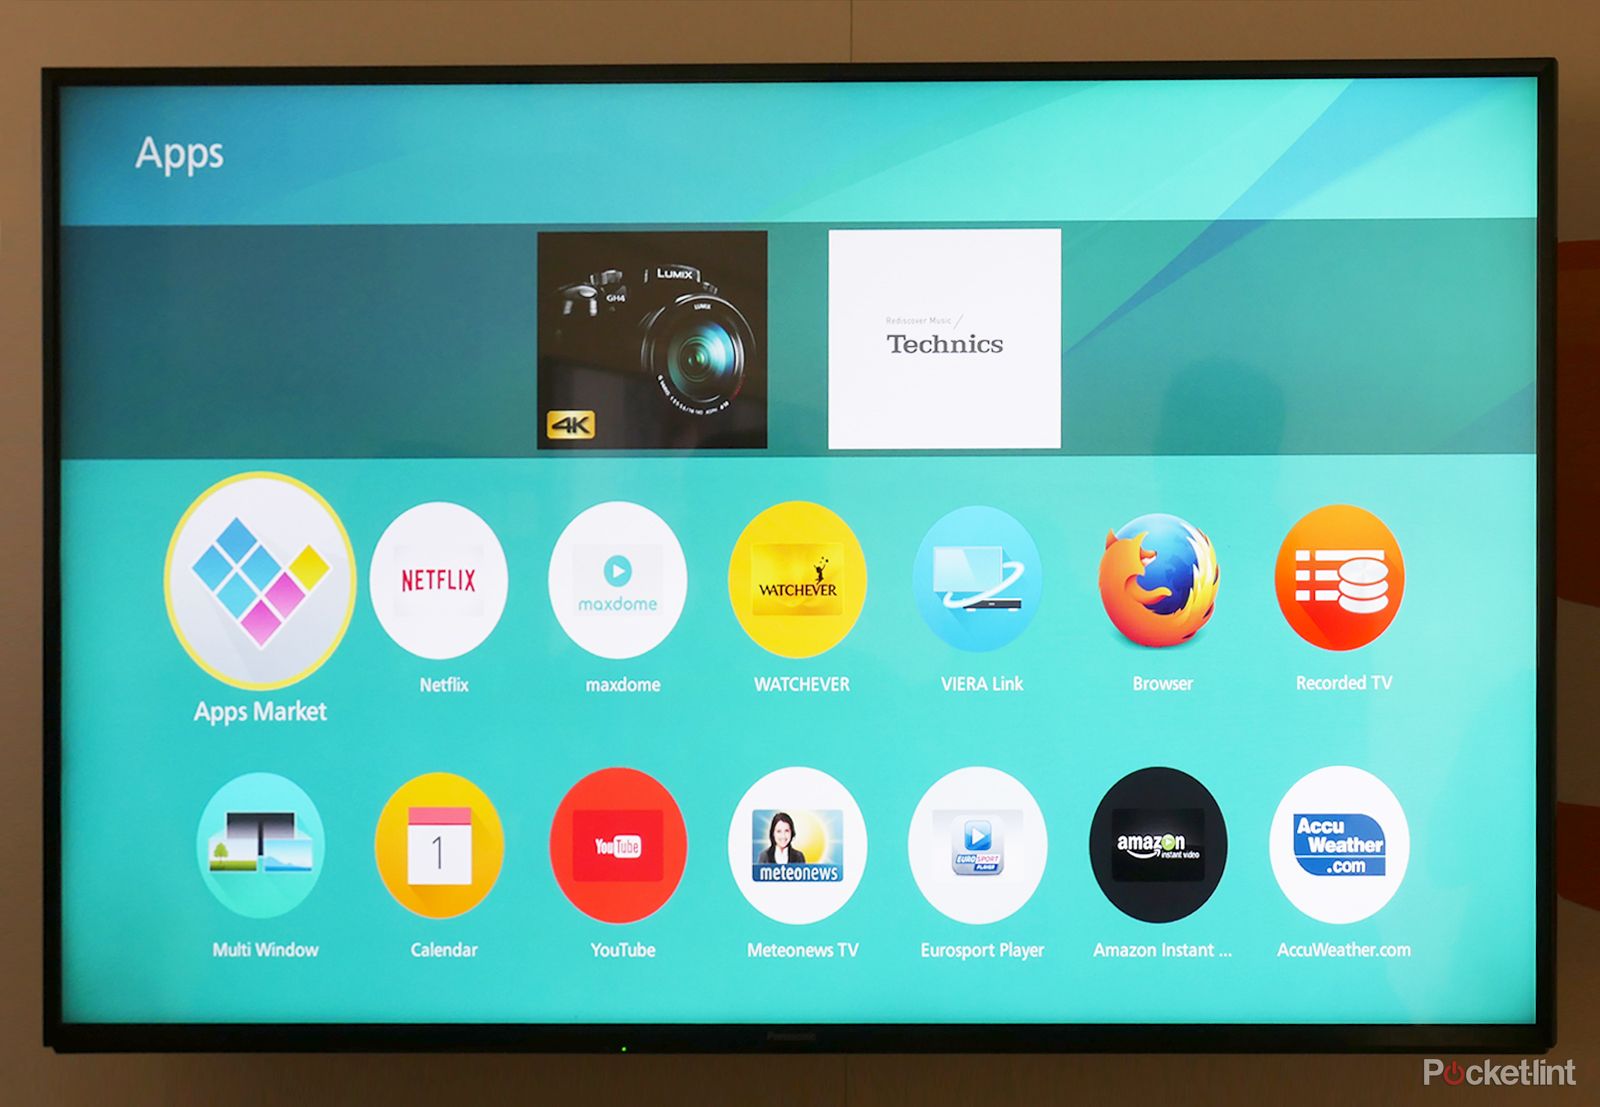 Firefox OS - Panasonic's Smart TV platform - is officially dead -  FlatpanelsHD